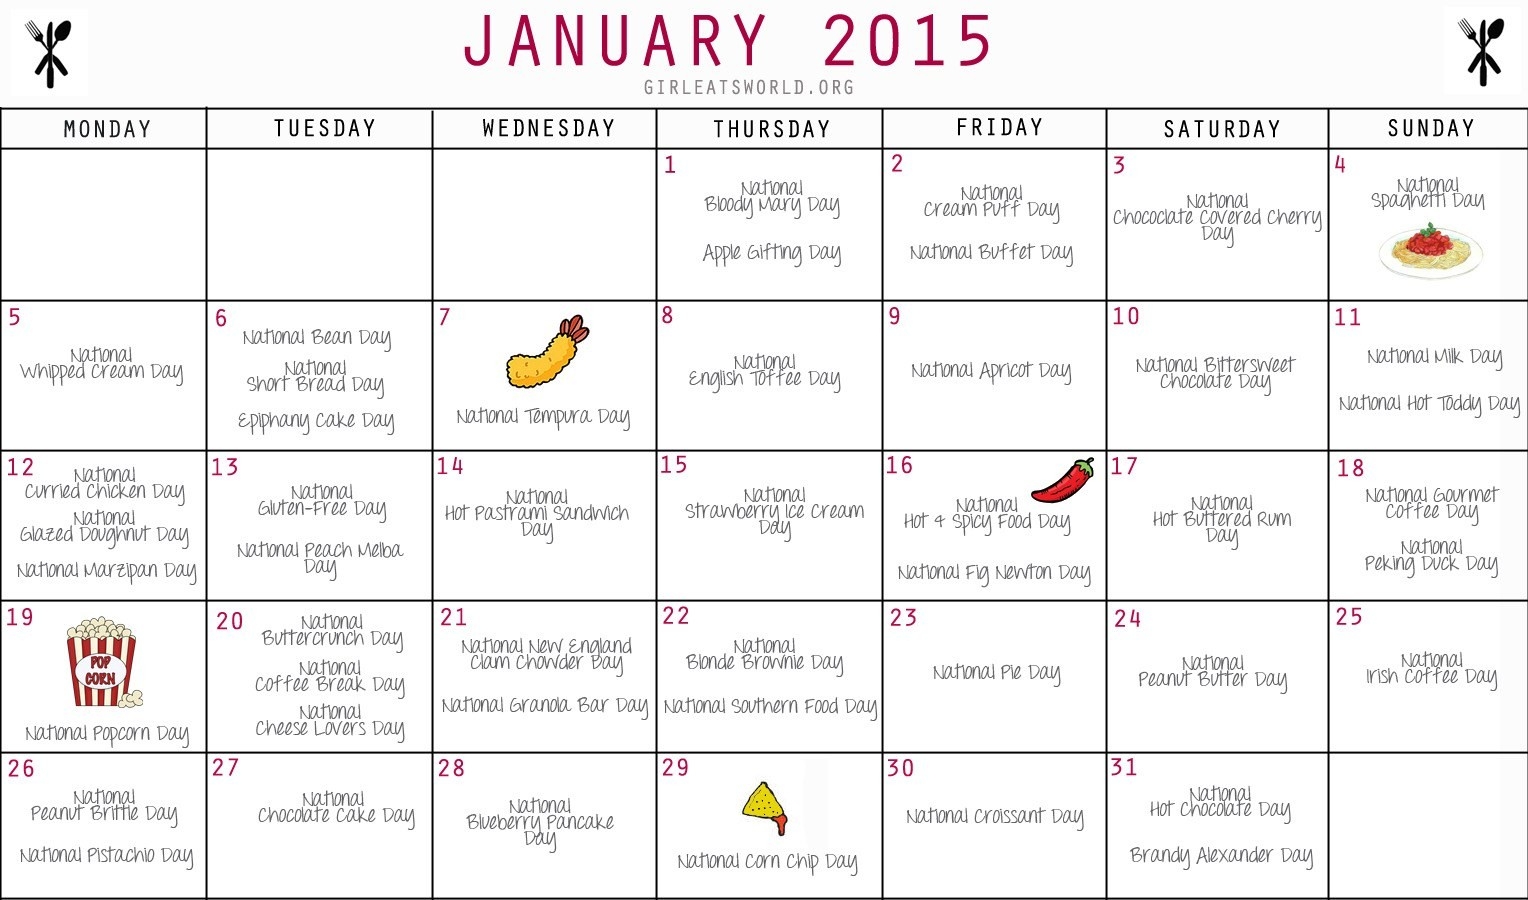 National Food Holidays January 2015 | Girl Eats World-National Food Holidays Calendar